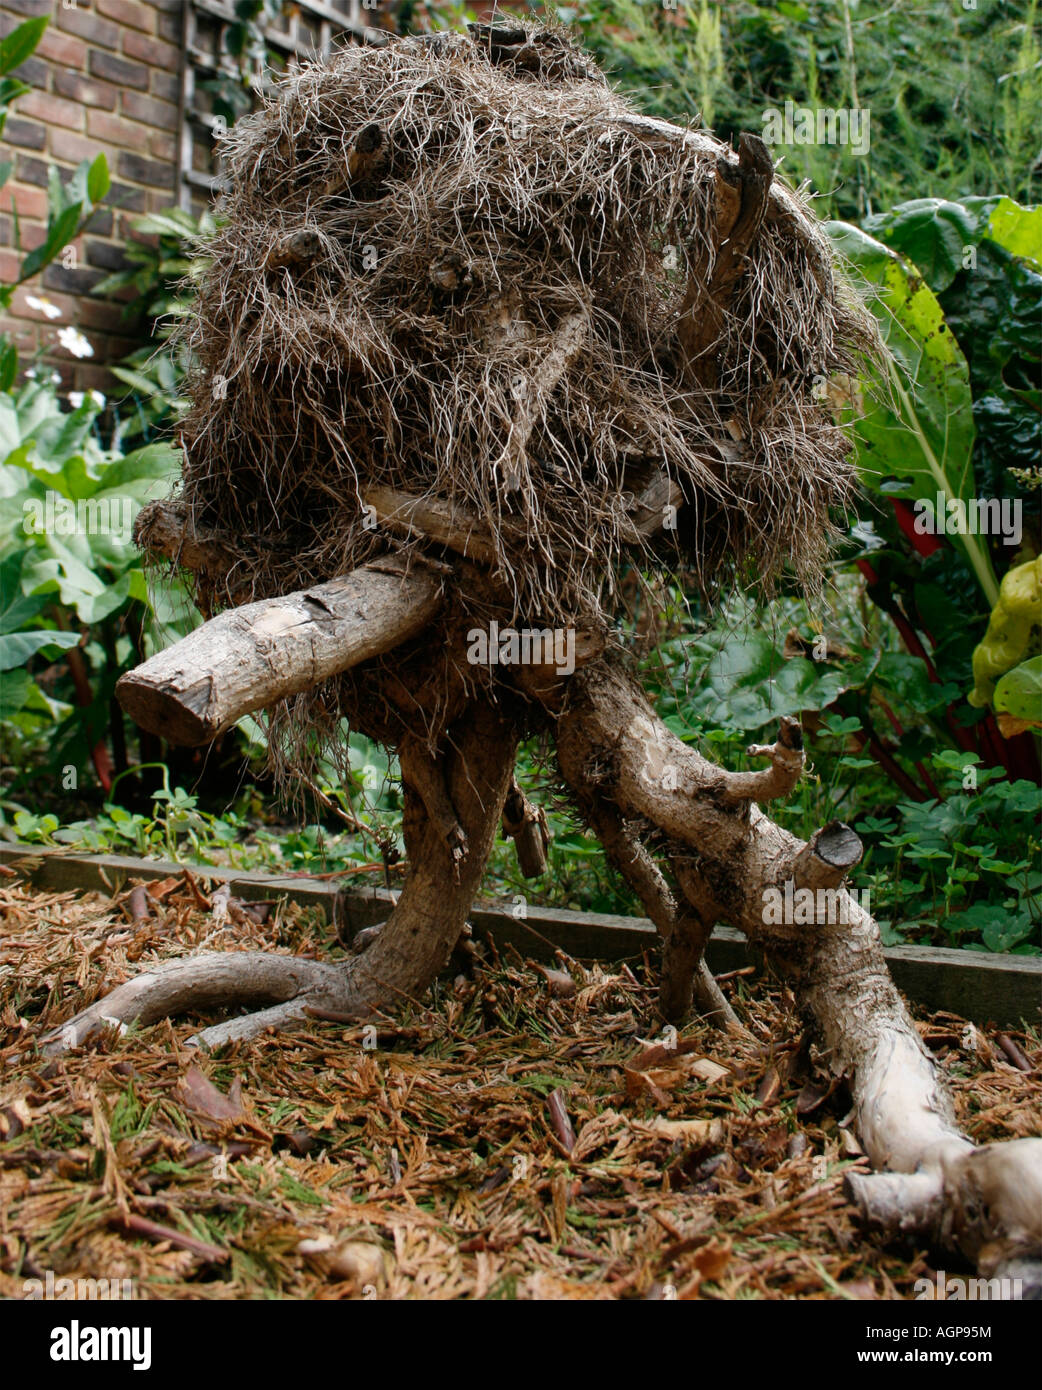 An Ivy root ball Sculpture in a vegetable garden Stock Photo